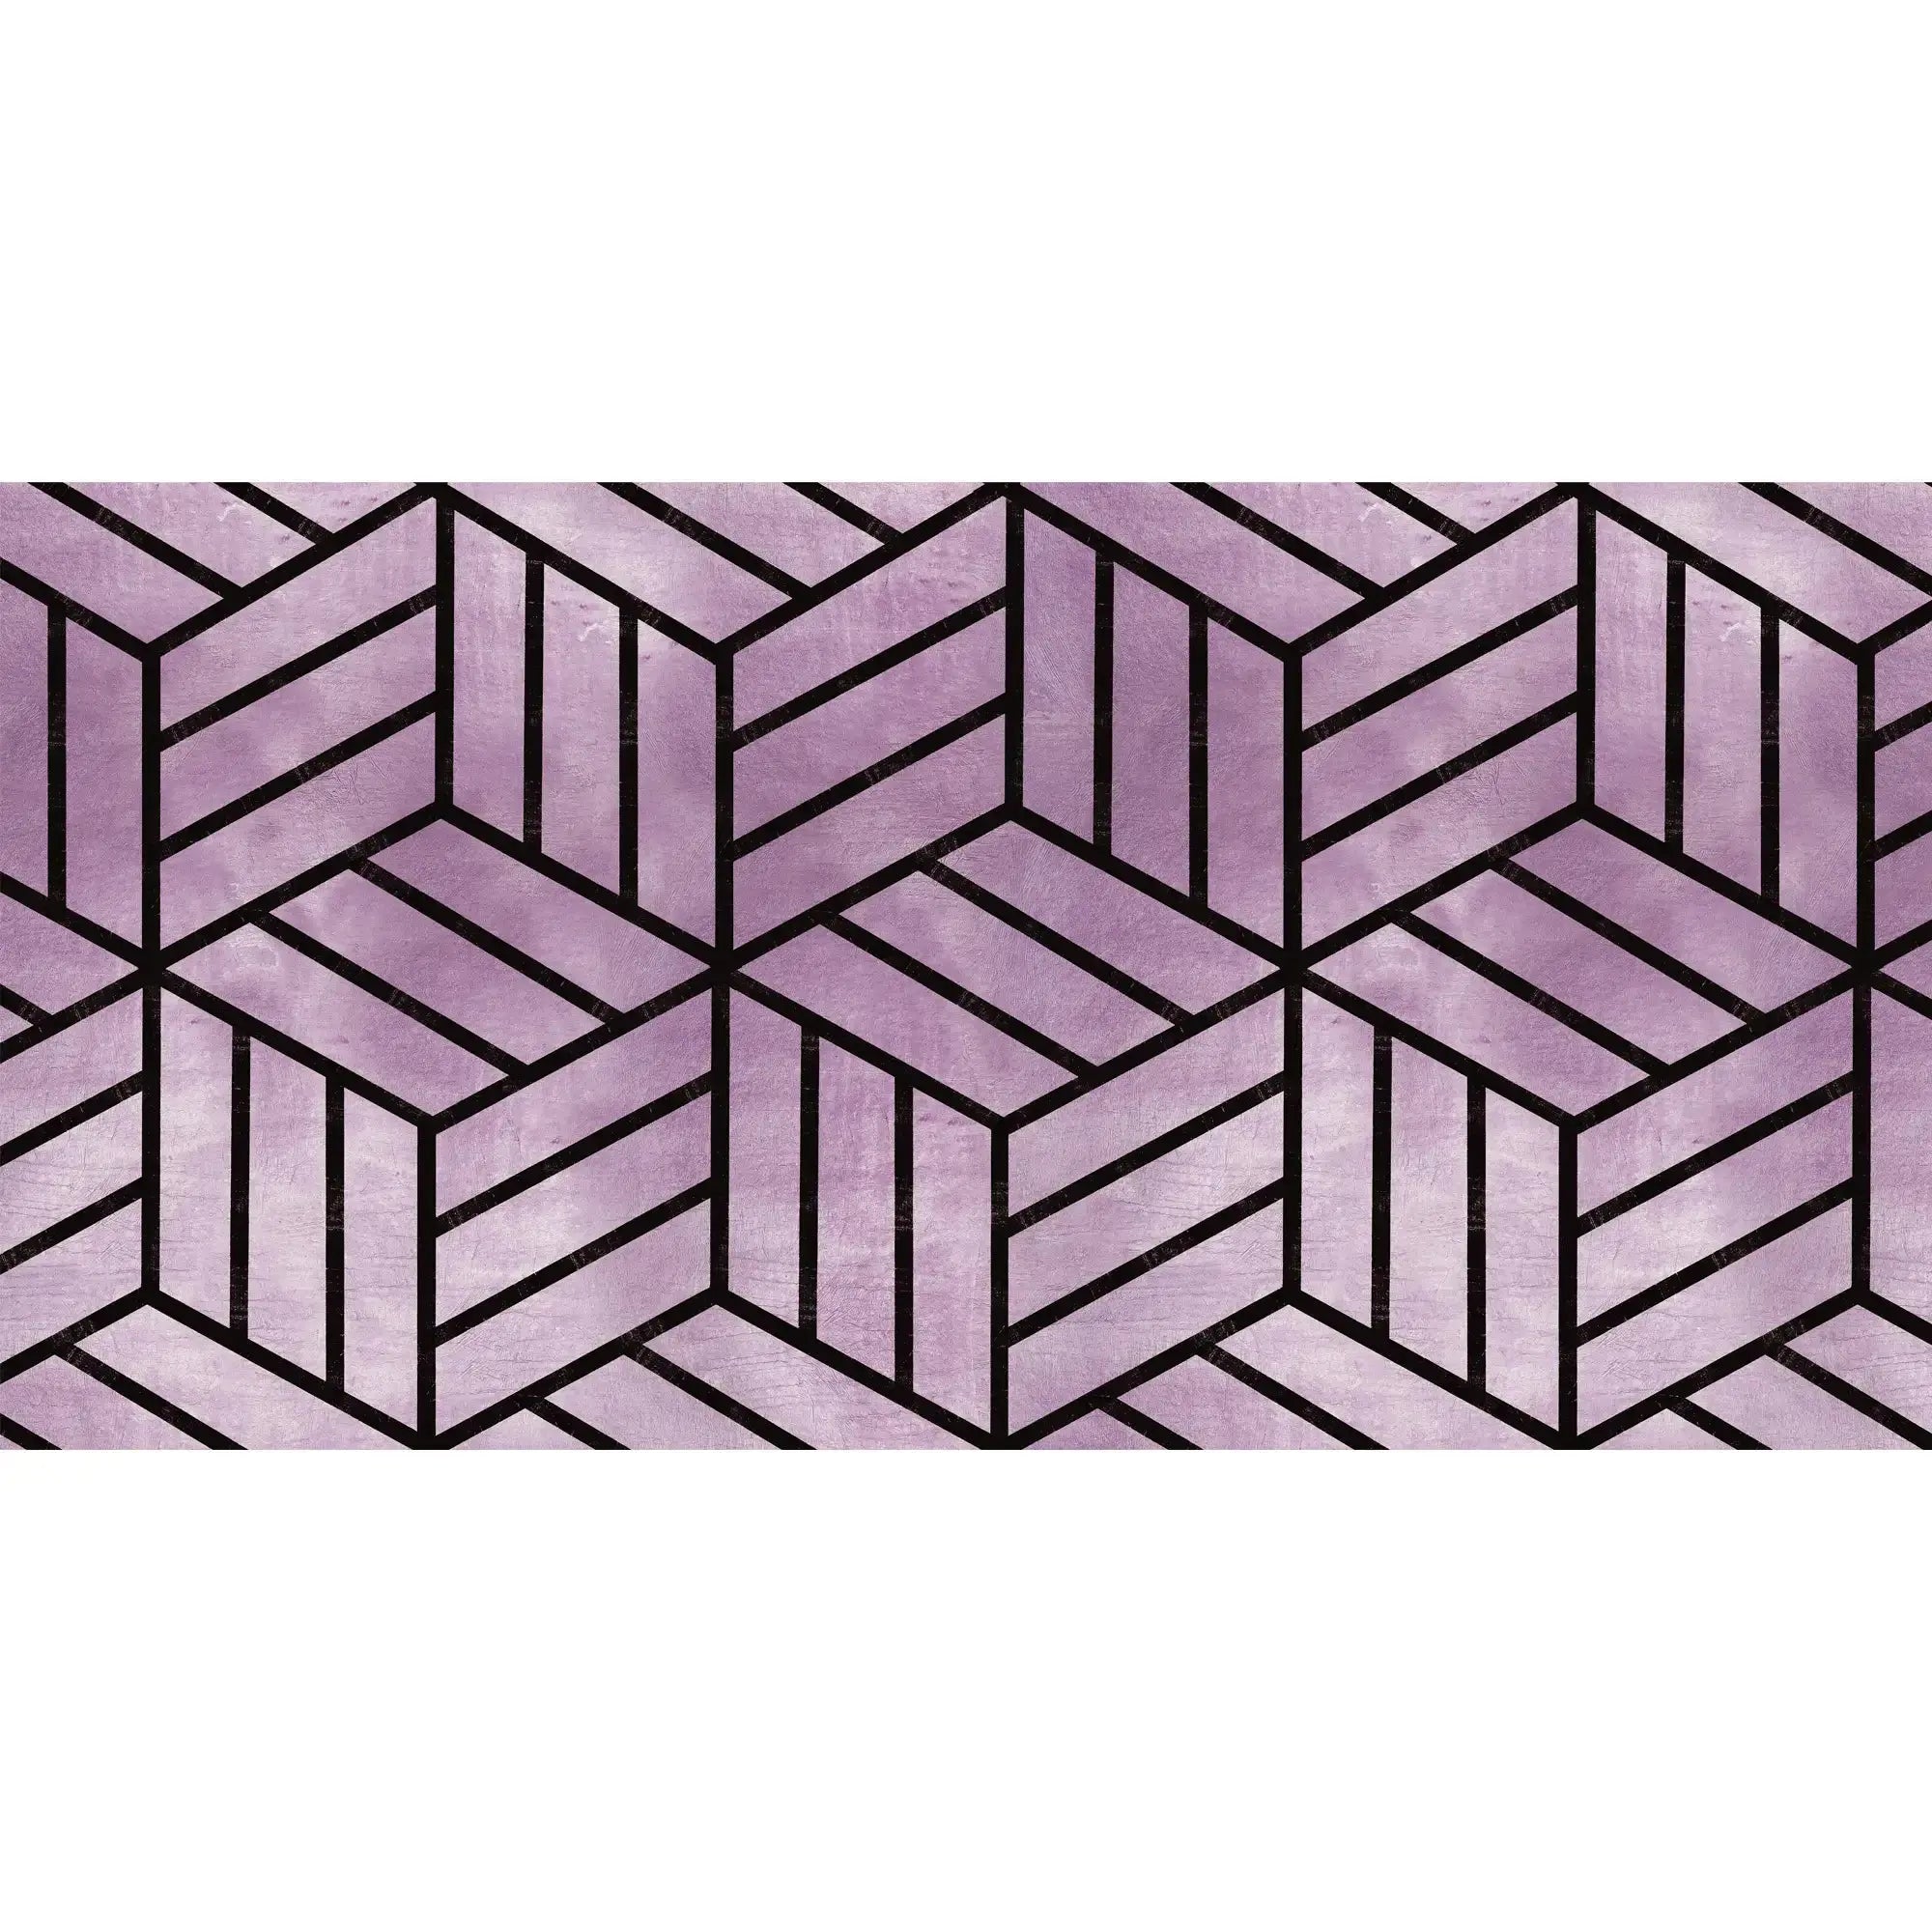 3133-D / Peel and Stick Geometric Wallpaper, Geometric Tile Design, Contemporary Geometric Line Wallpaper - Artevella